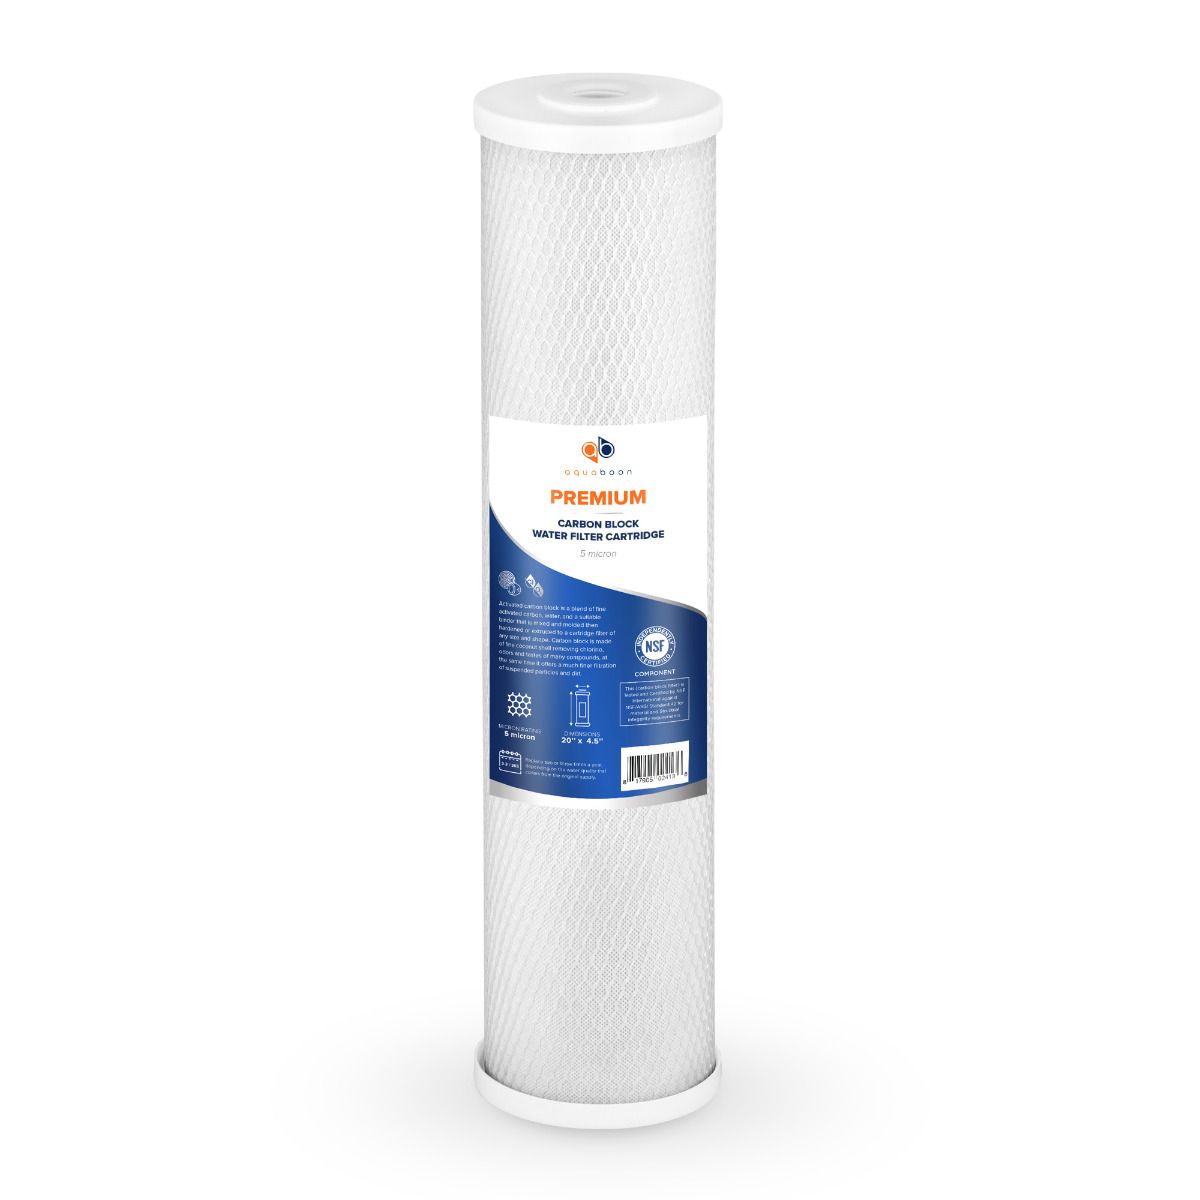 Premium Aquaboon 5 Micron 20 x 4.5 Inch. Carbon block Water Filter Cartridge